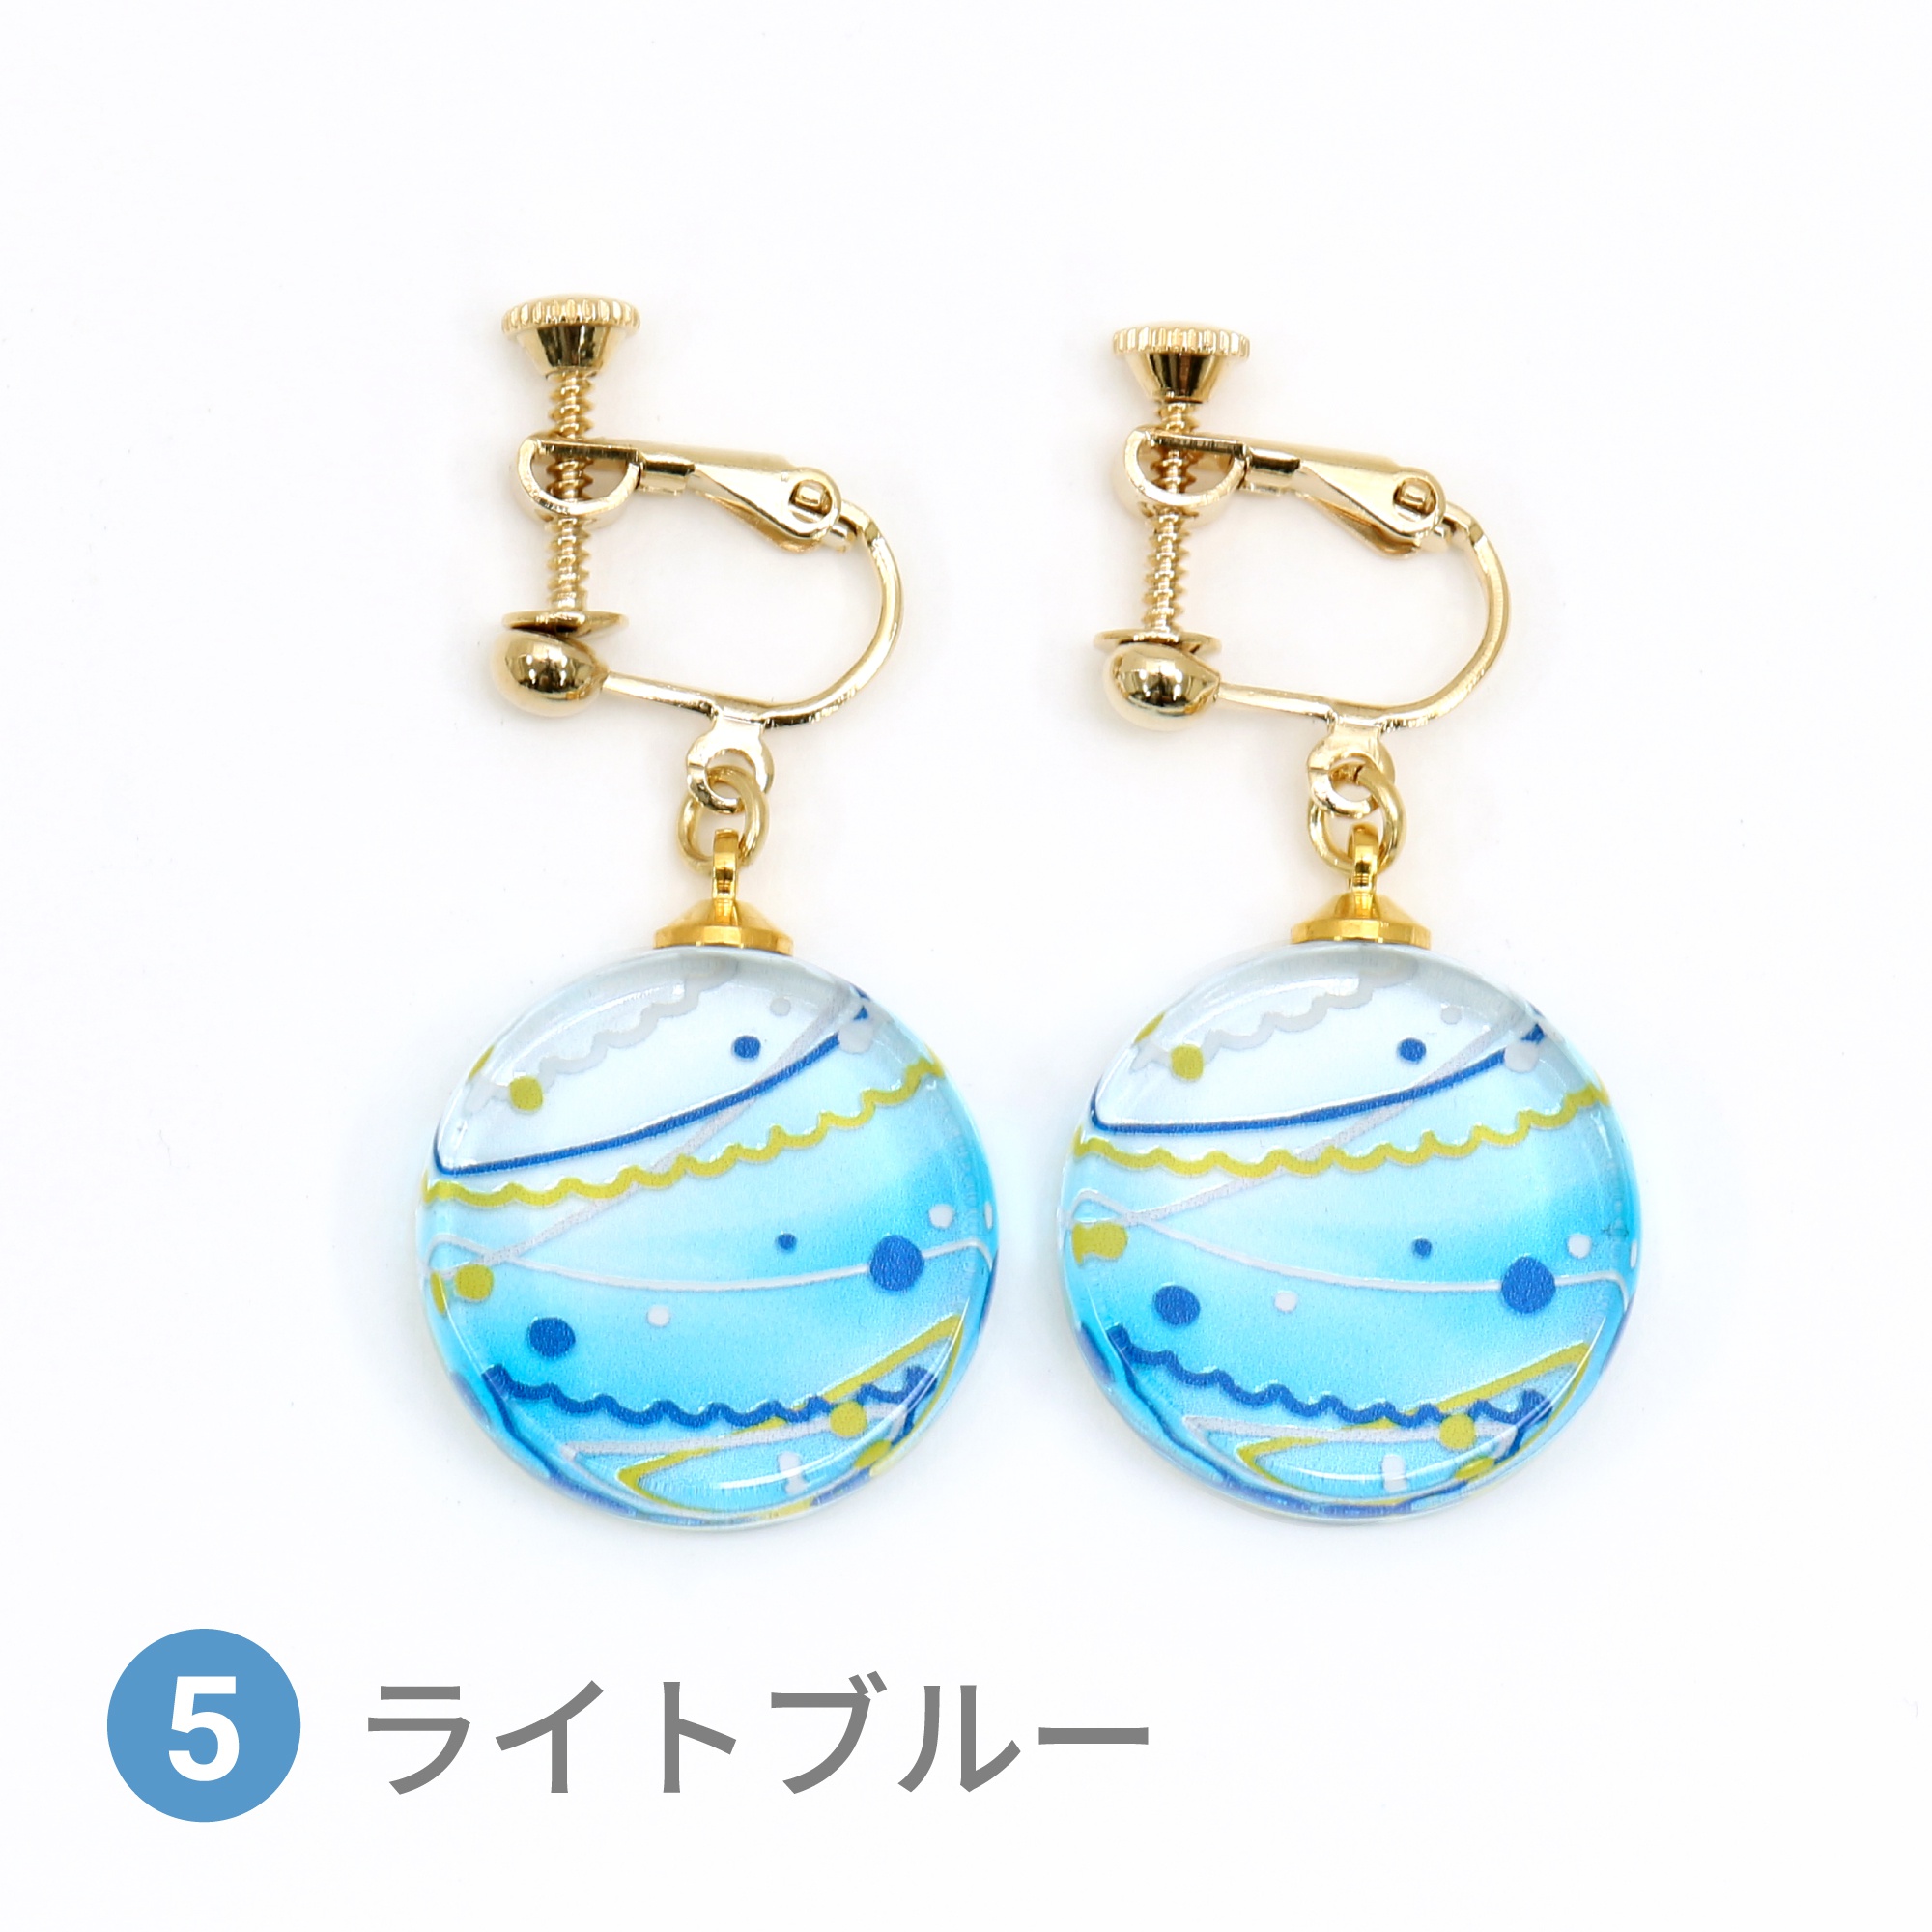 Glass accessories Earring WATER BALLOON lightblue round shape